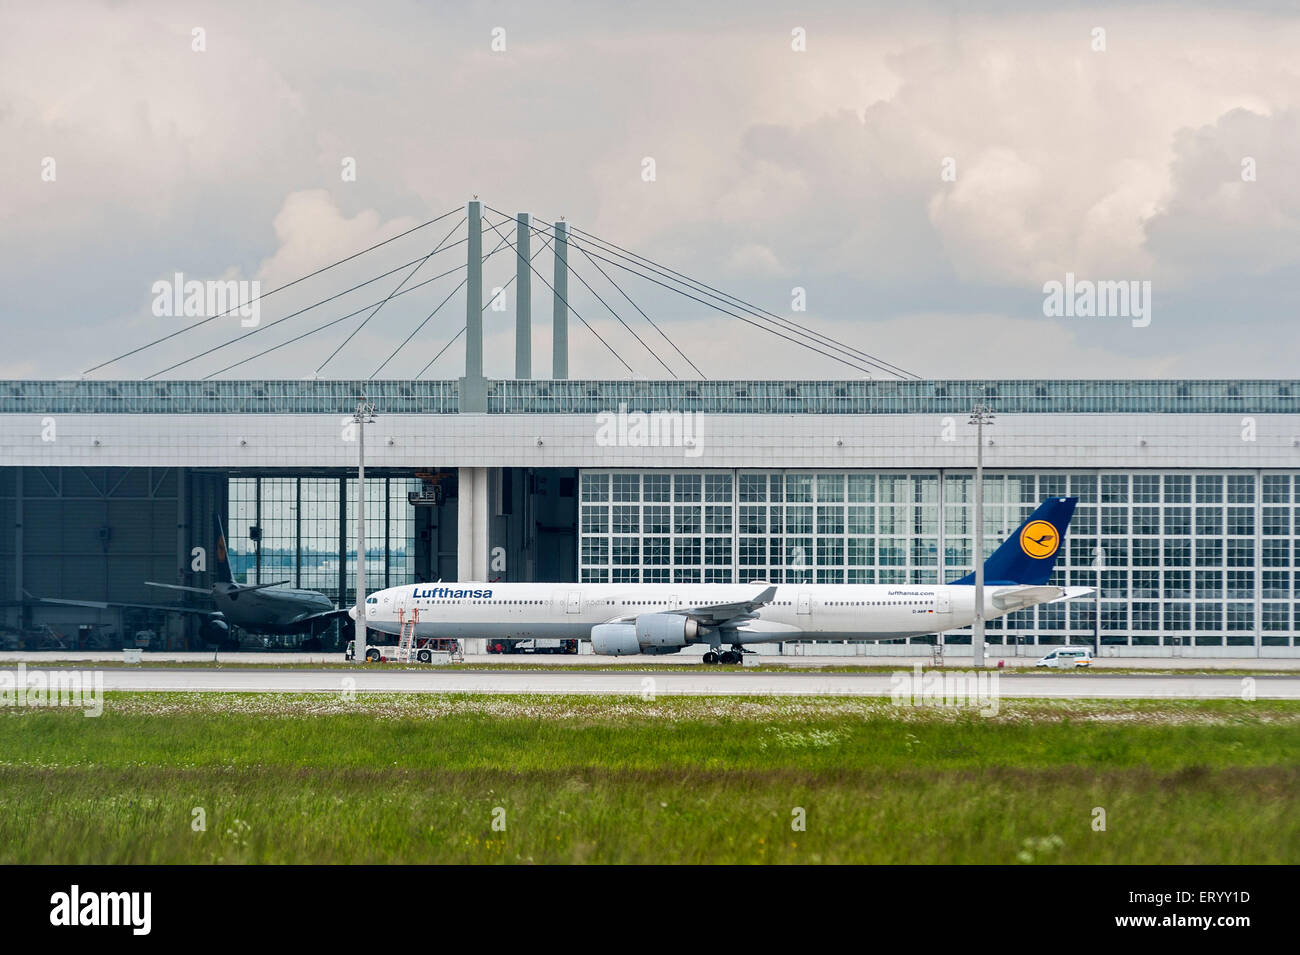 Lufthansa Airplane in front of Hangar - Lufthansa Technik Stock Photo